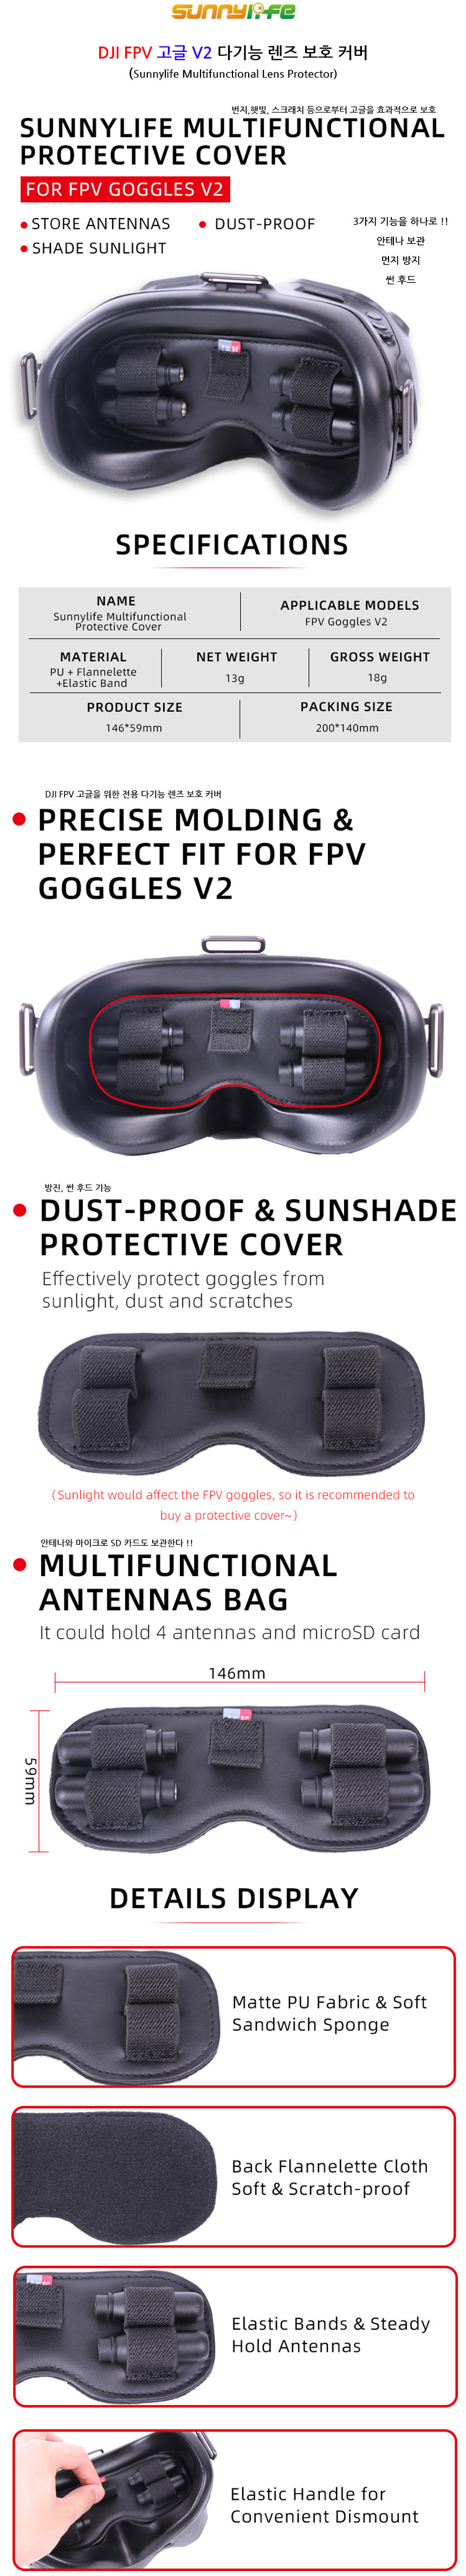 Sunnylife-Multifunctional-Lens-Protector.jpg